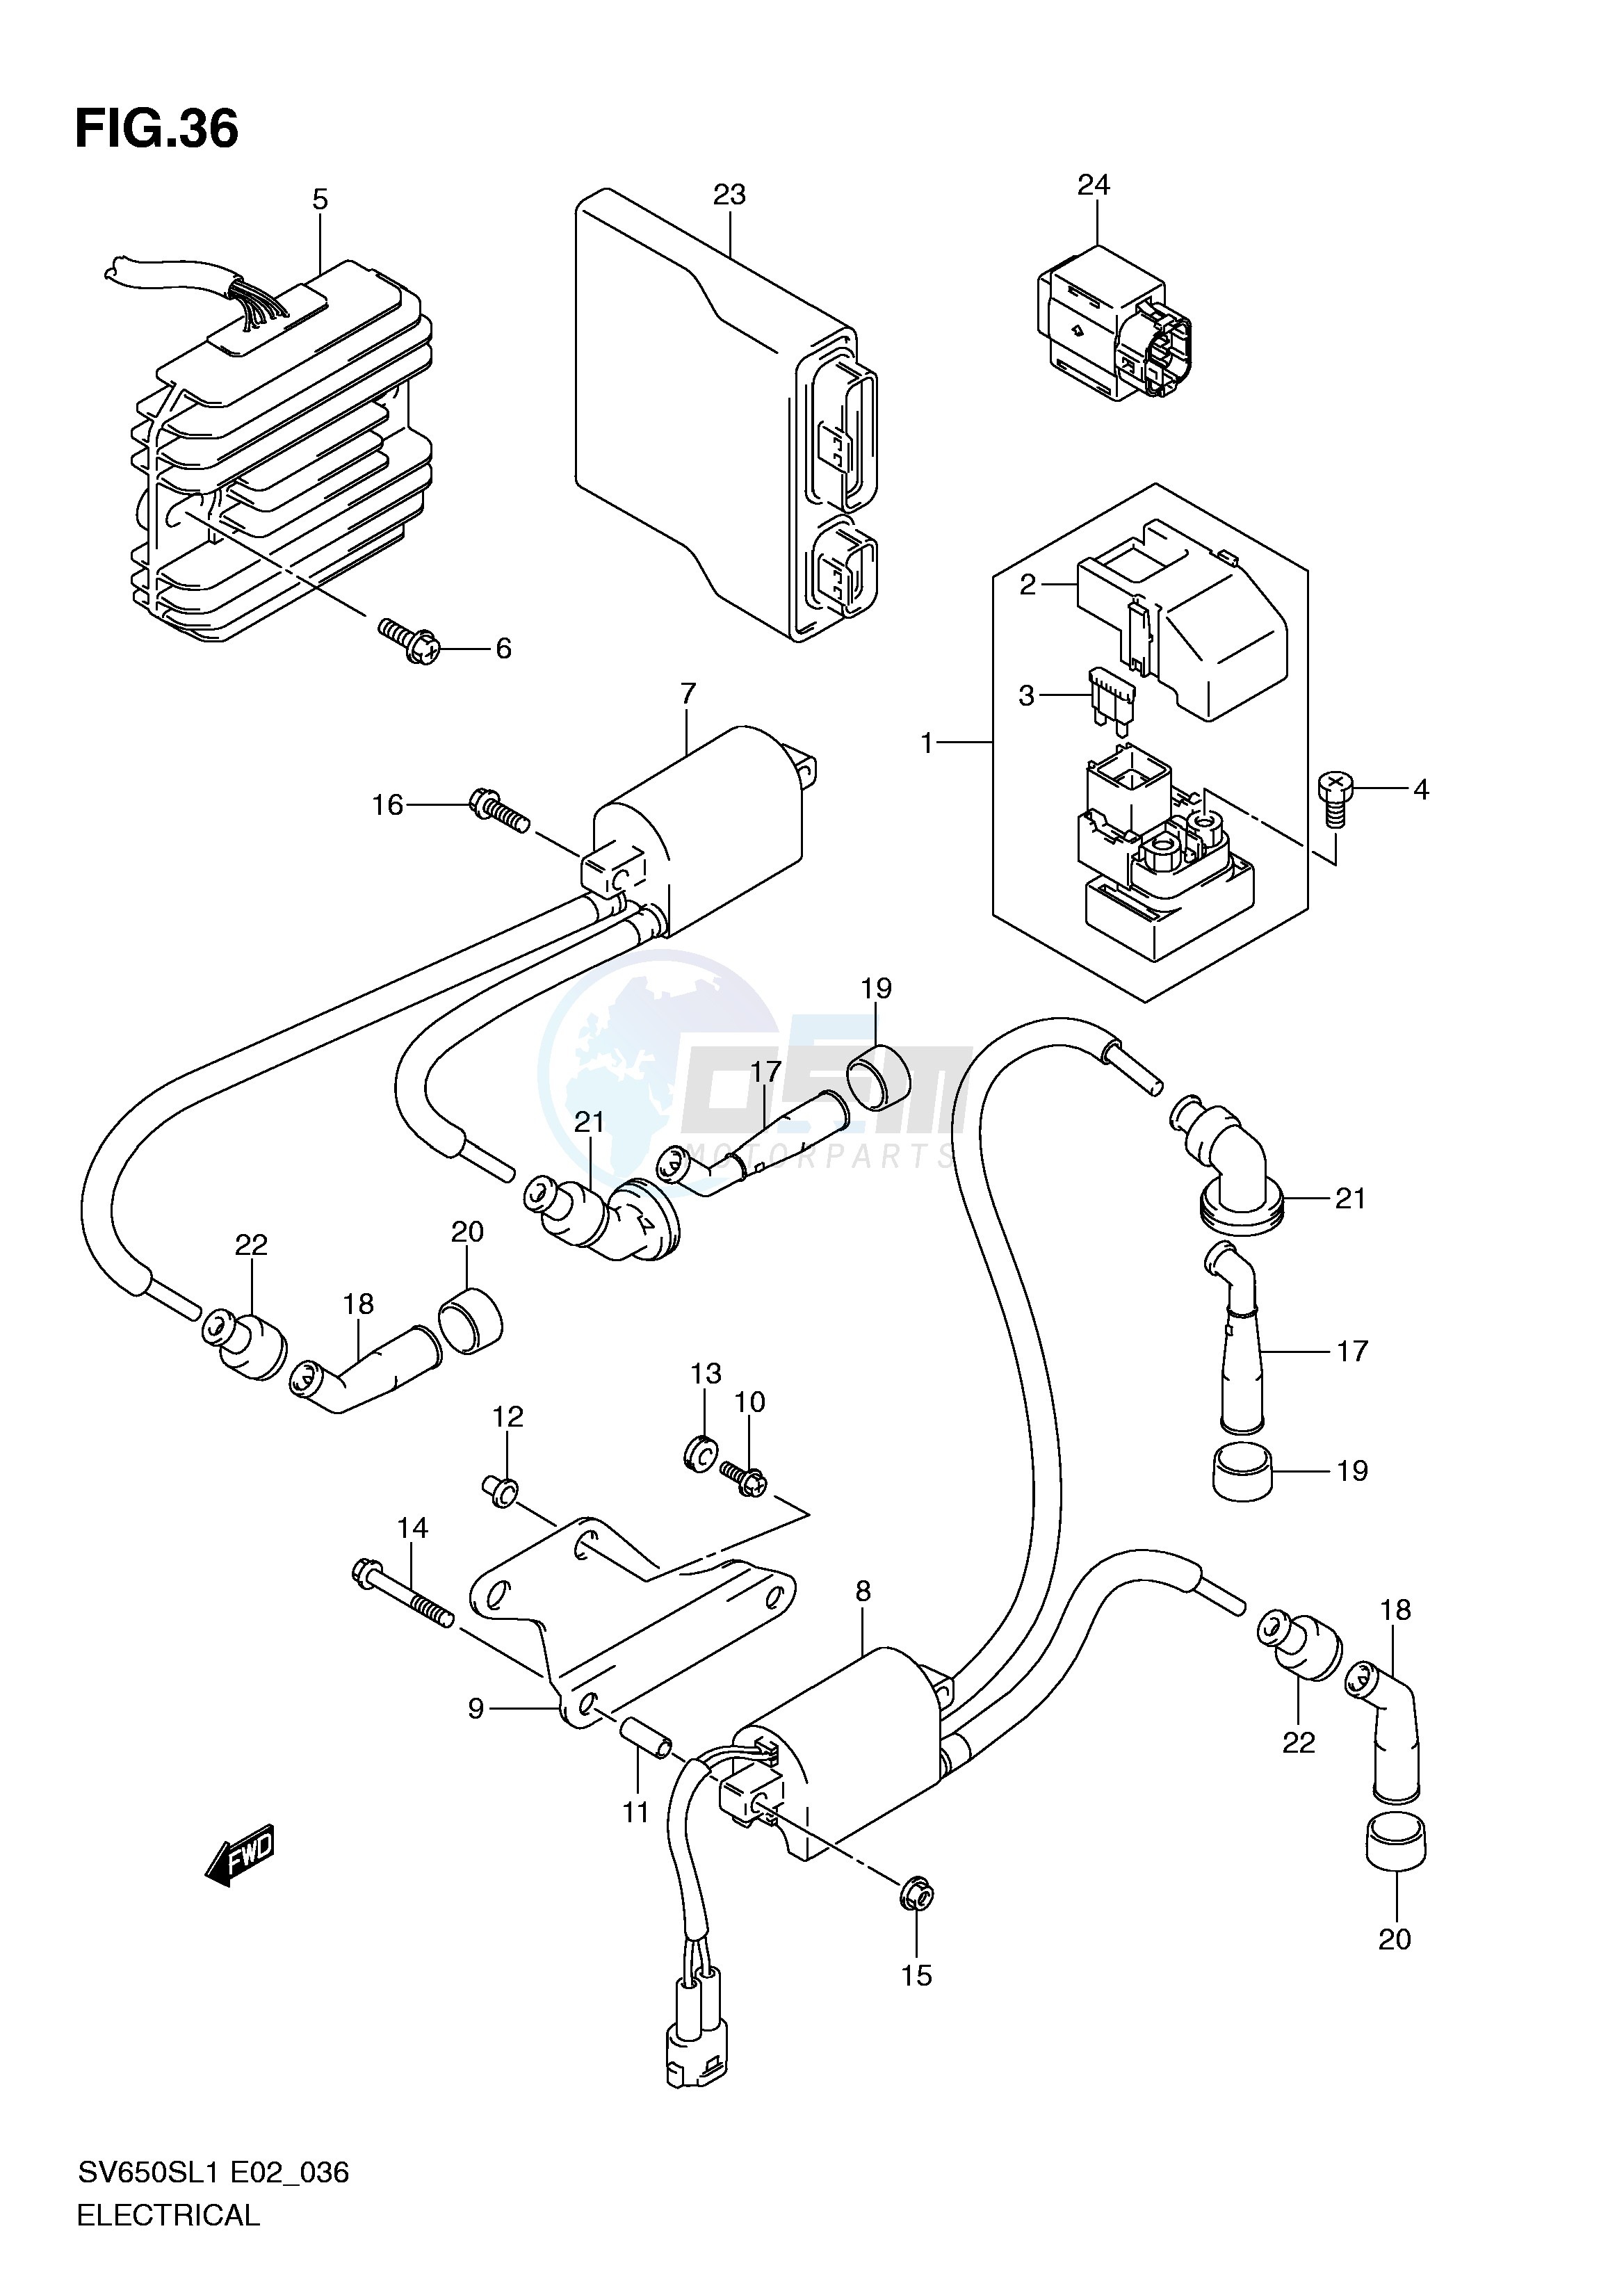 ELECTRICAL (SV650SAL1 E24) blueprint